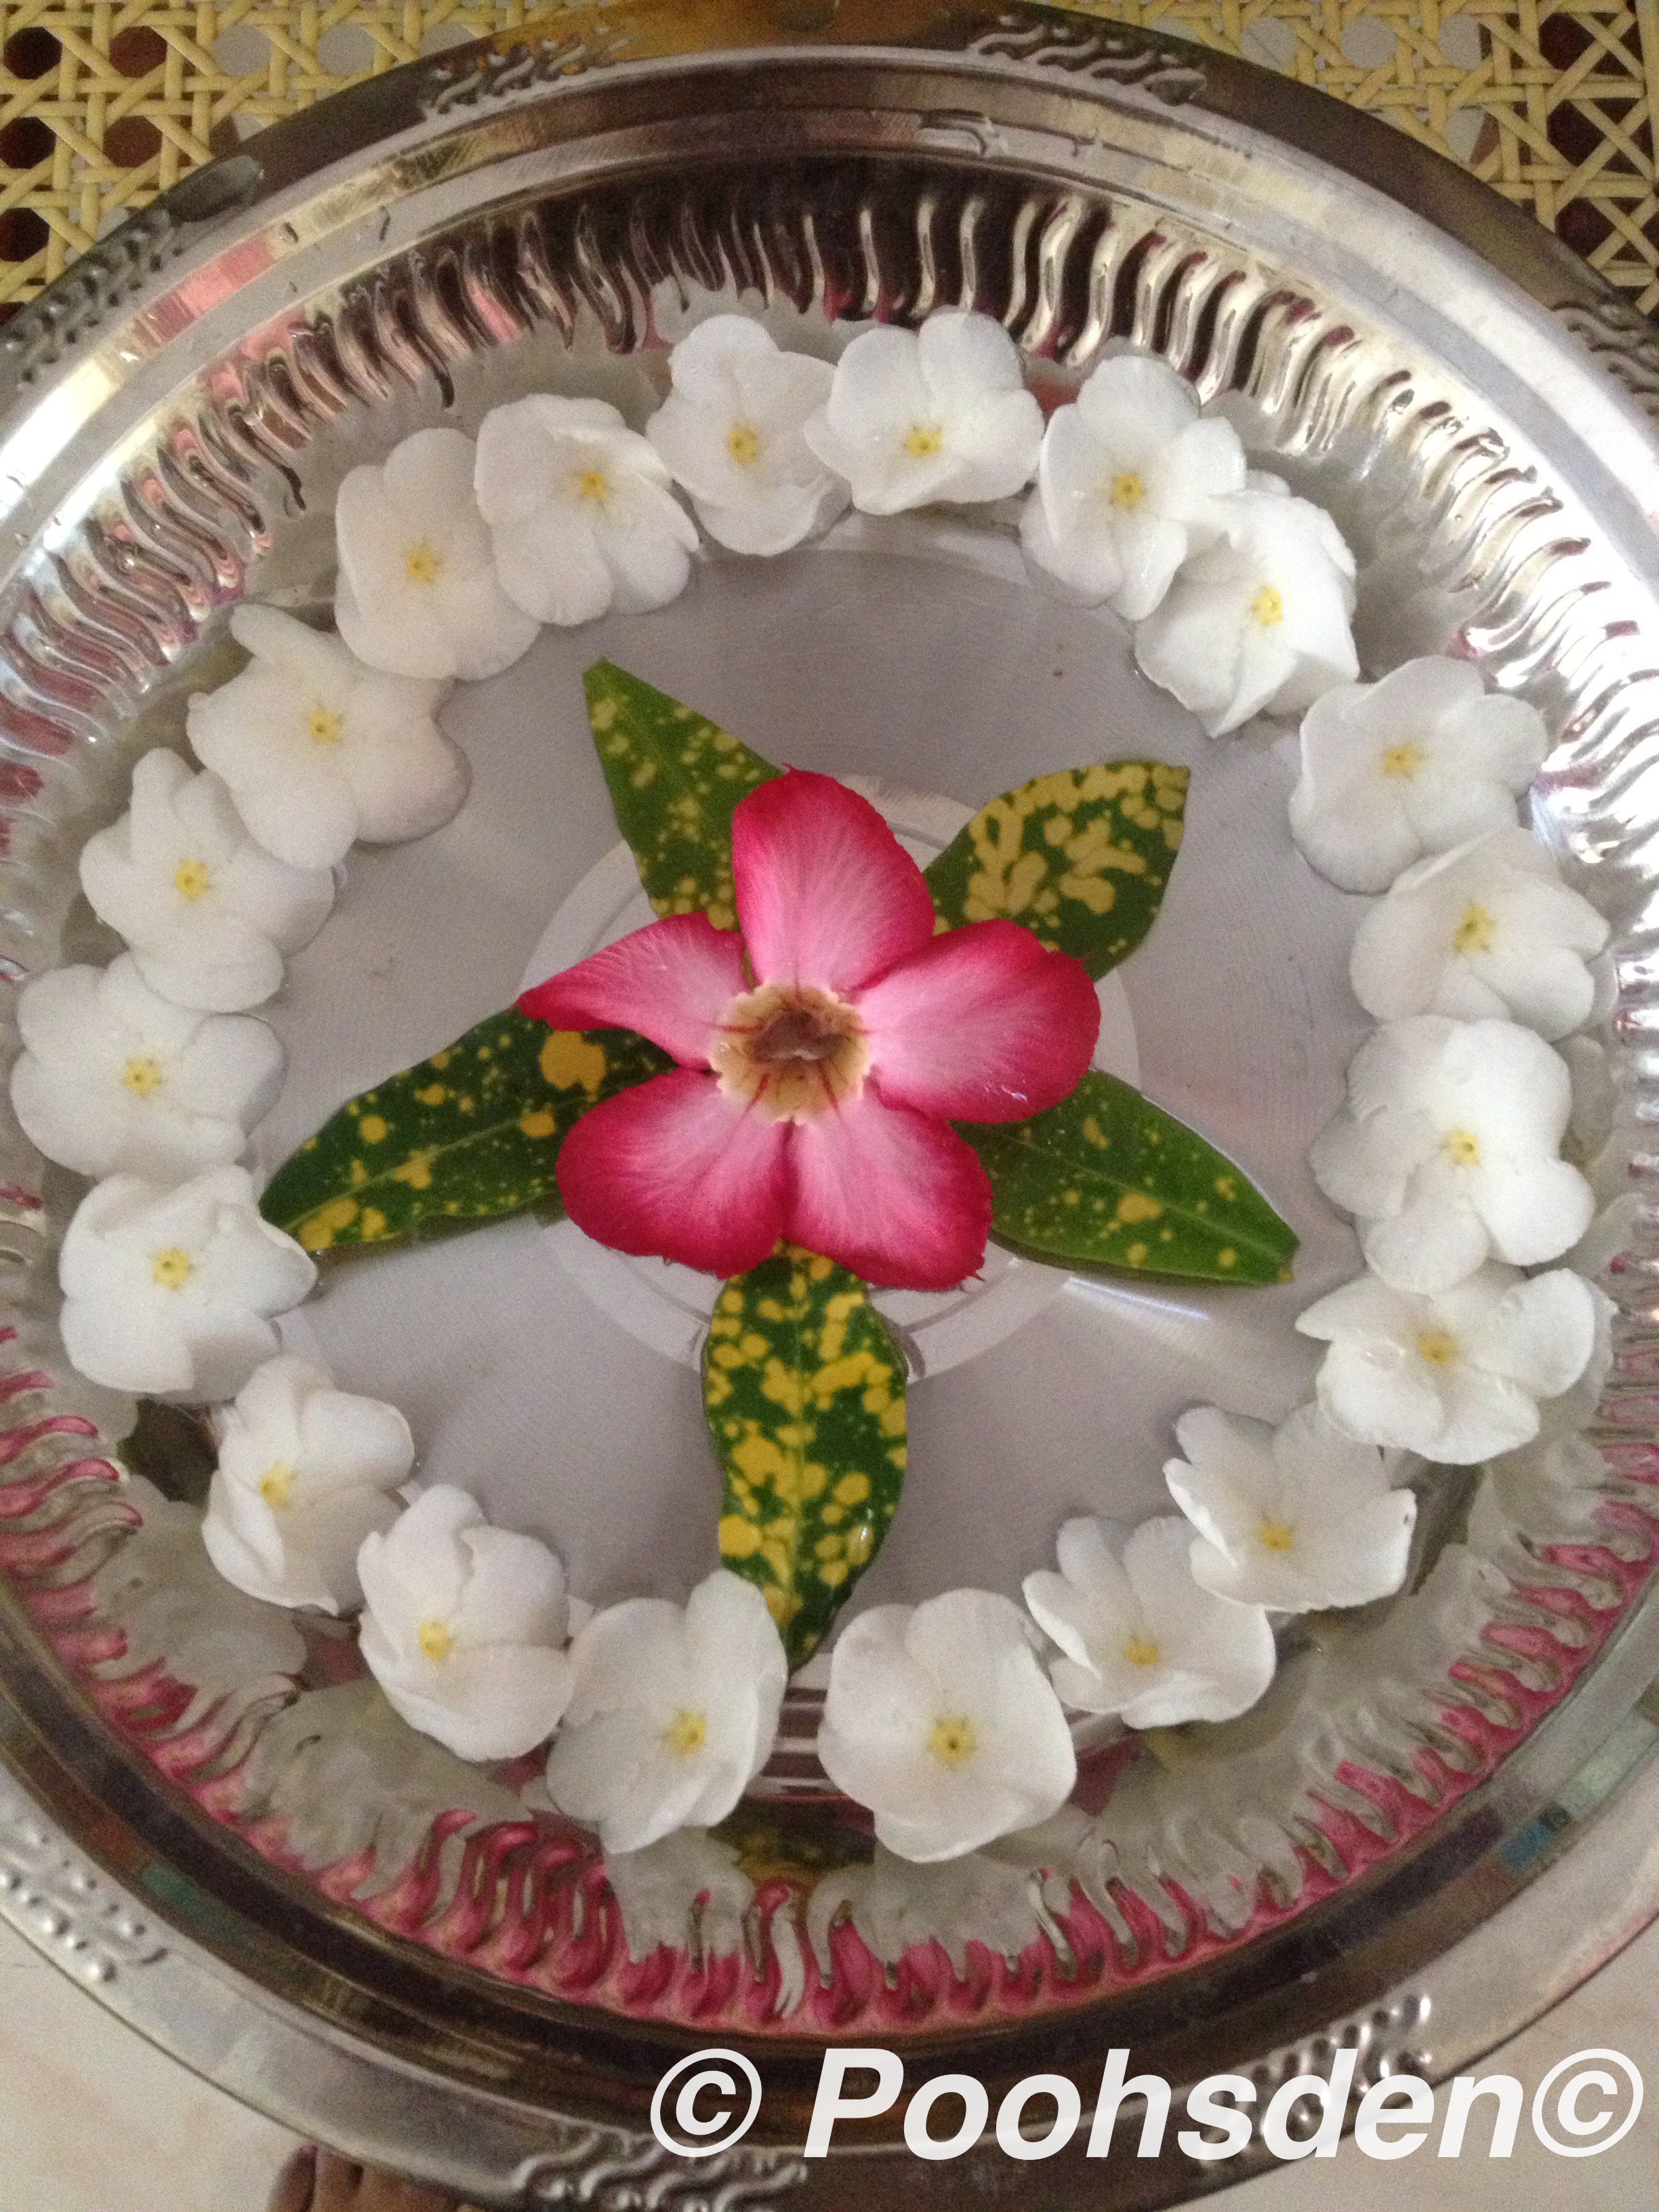 Flower mandalas made at home